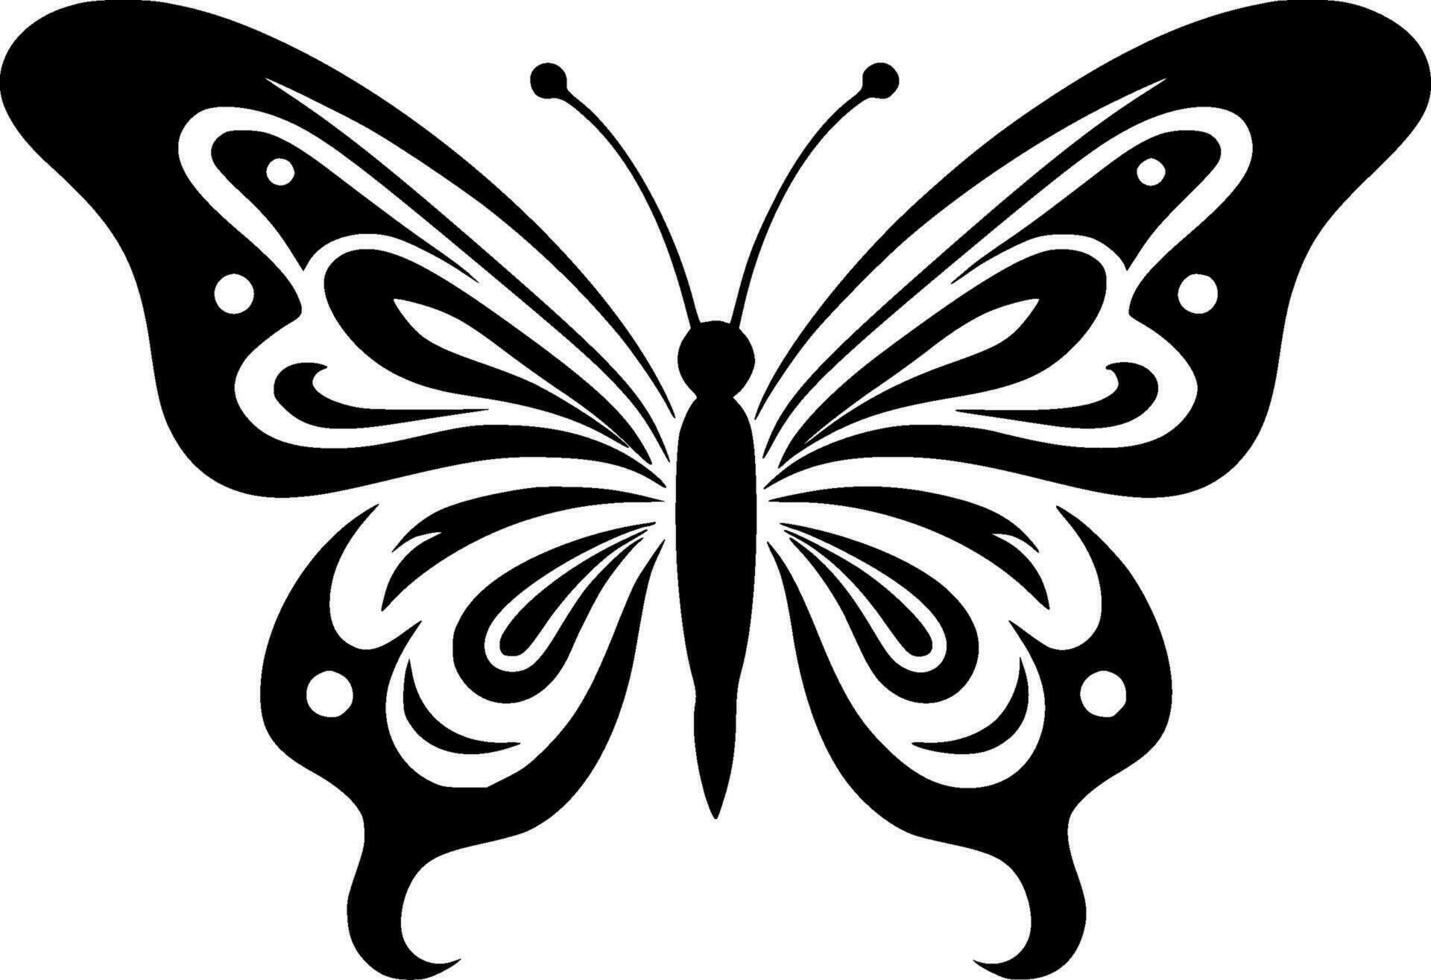 borboletas, minimalista e simples silhueta - vetor ilustração